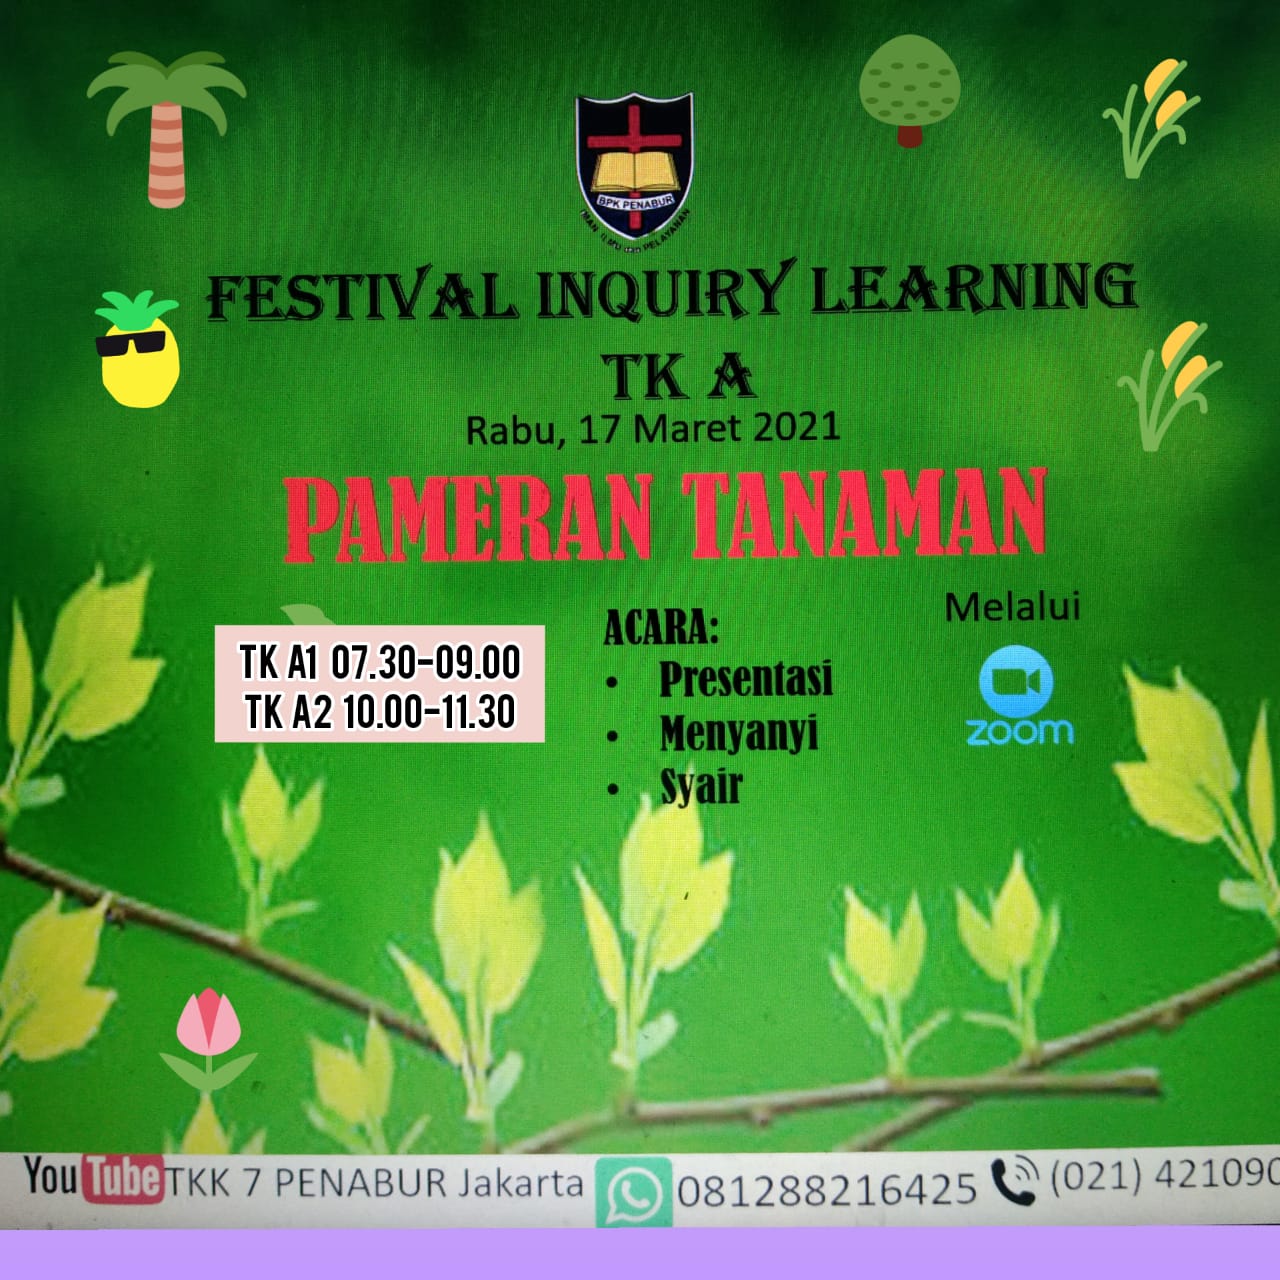 Festival Inquiry Learning TK A "Pameran Tanaman"